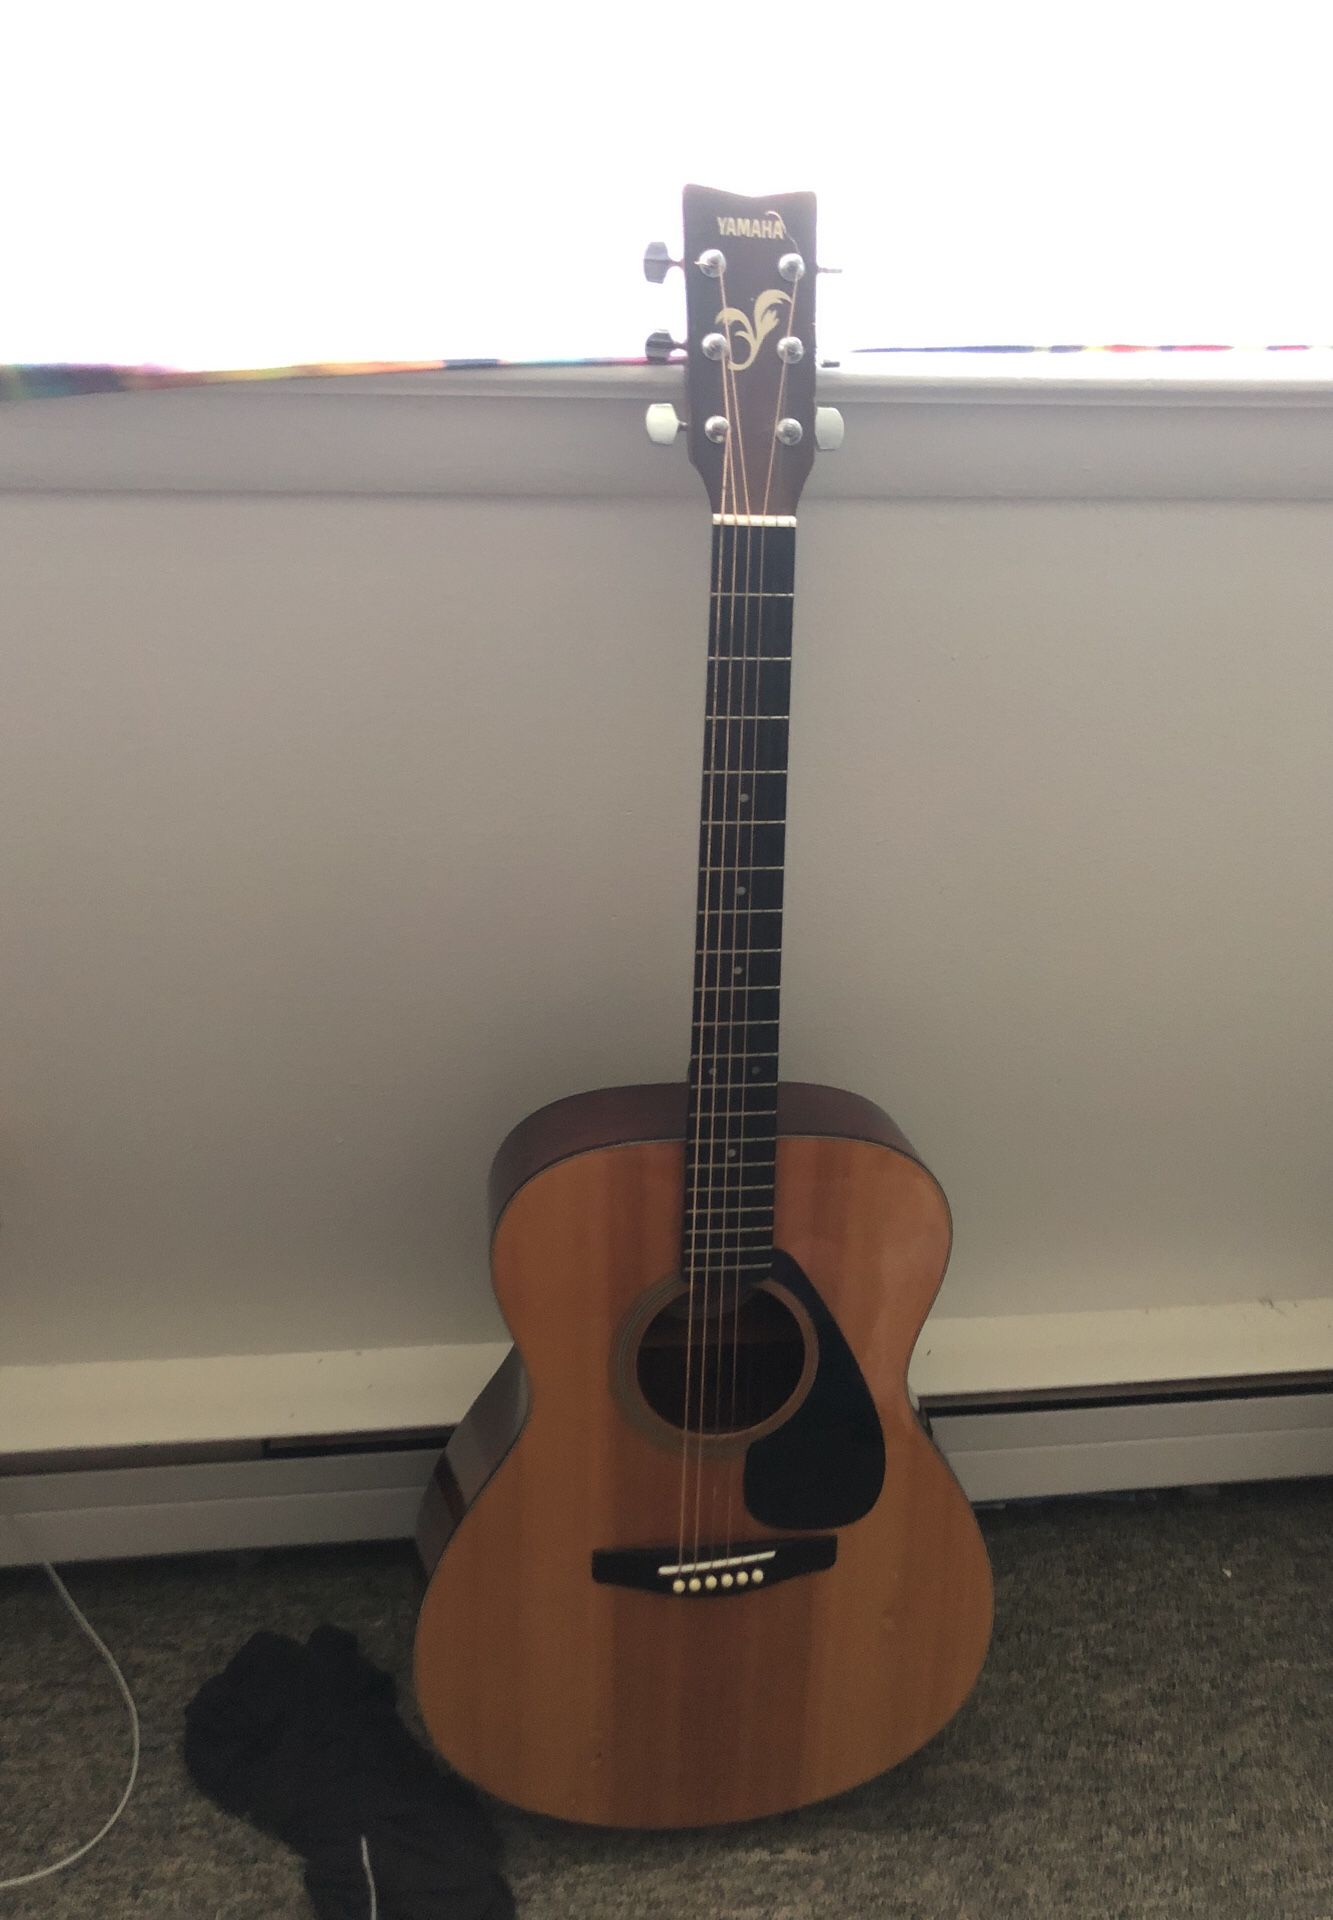 Yamaha acoustic guitar.